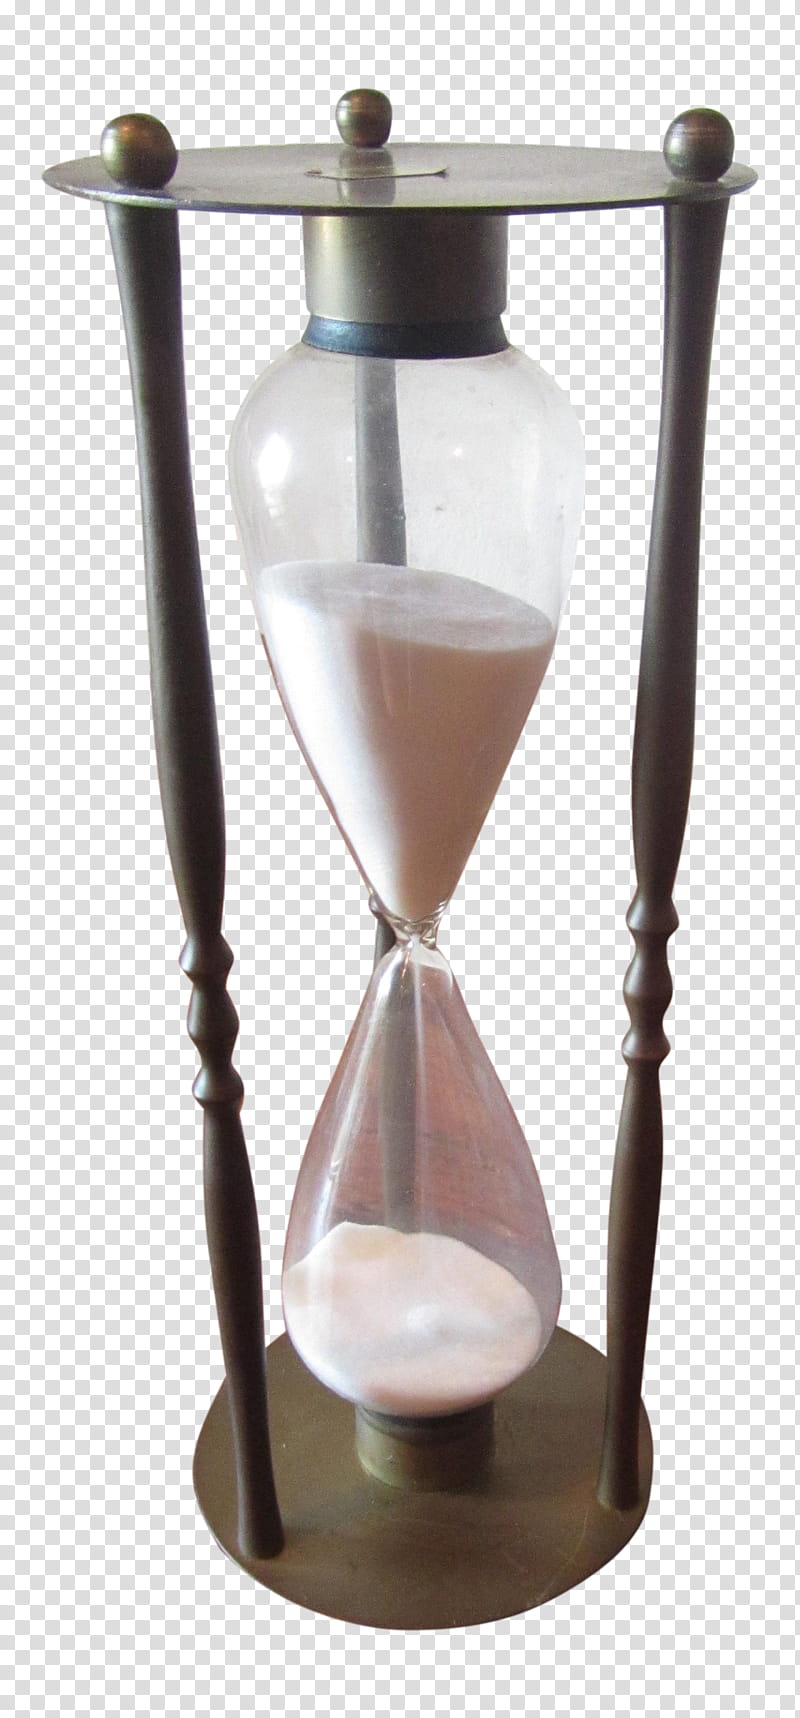 Clock, Hourglass, Timer, Egg Timer, Sand Timer, Bronze, Brass, Midcentury Modern transparent background PNG clipart